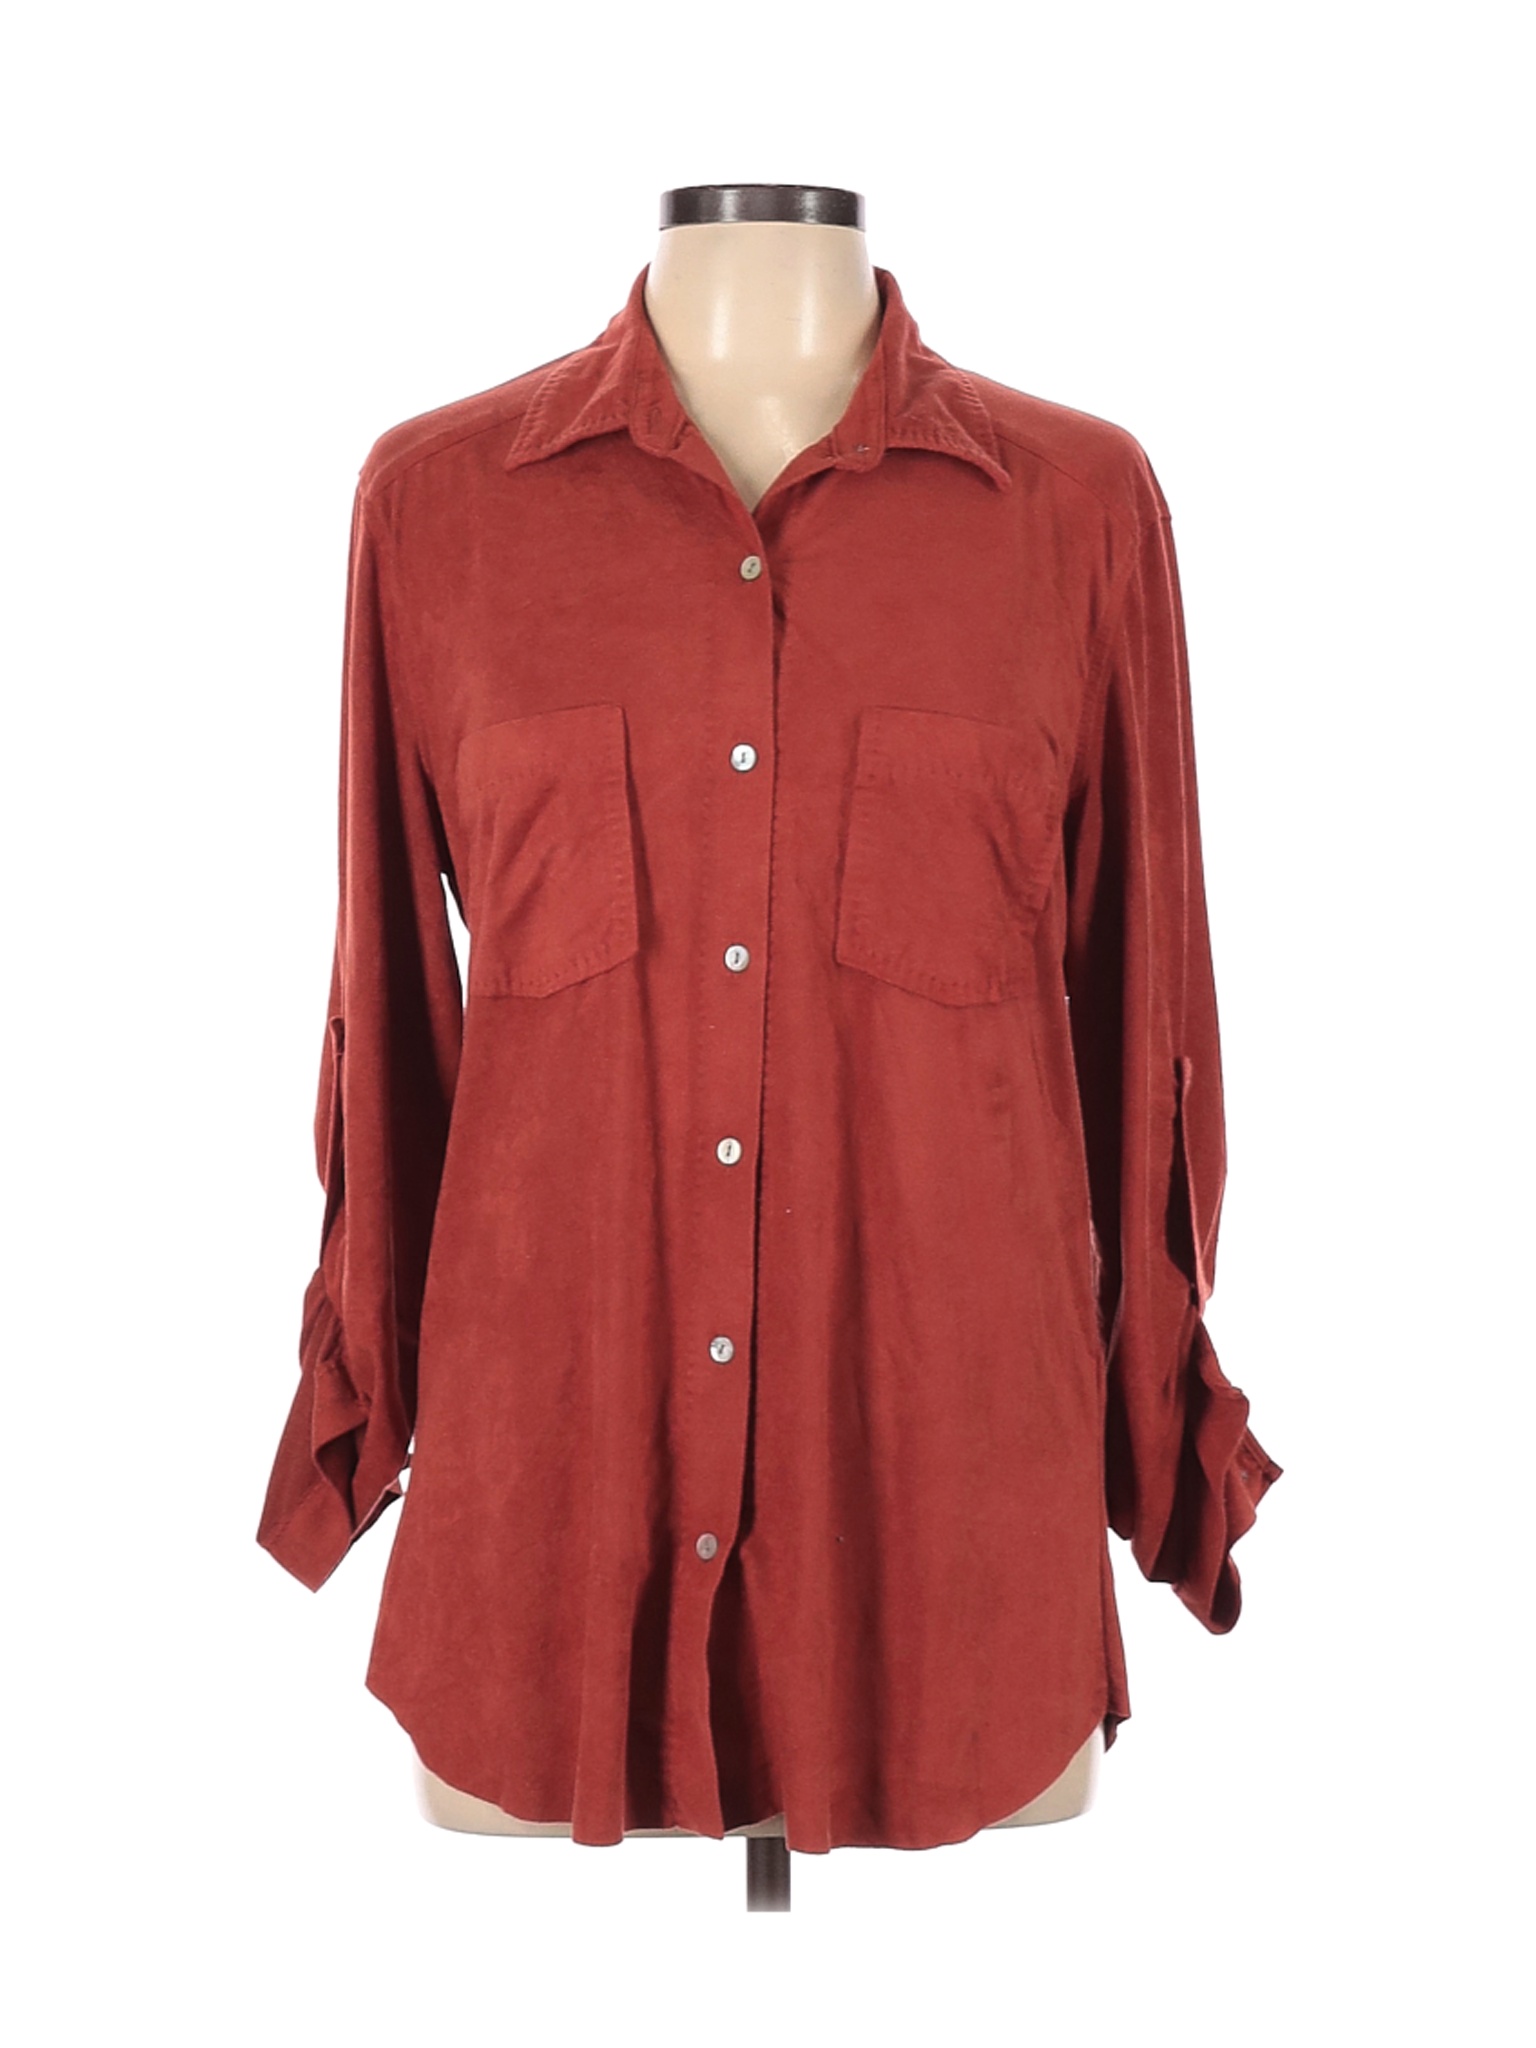 Chelsea & Violet Women Brown Long Sleeve Blouse L | eBay